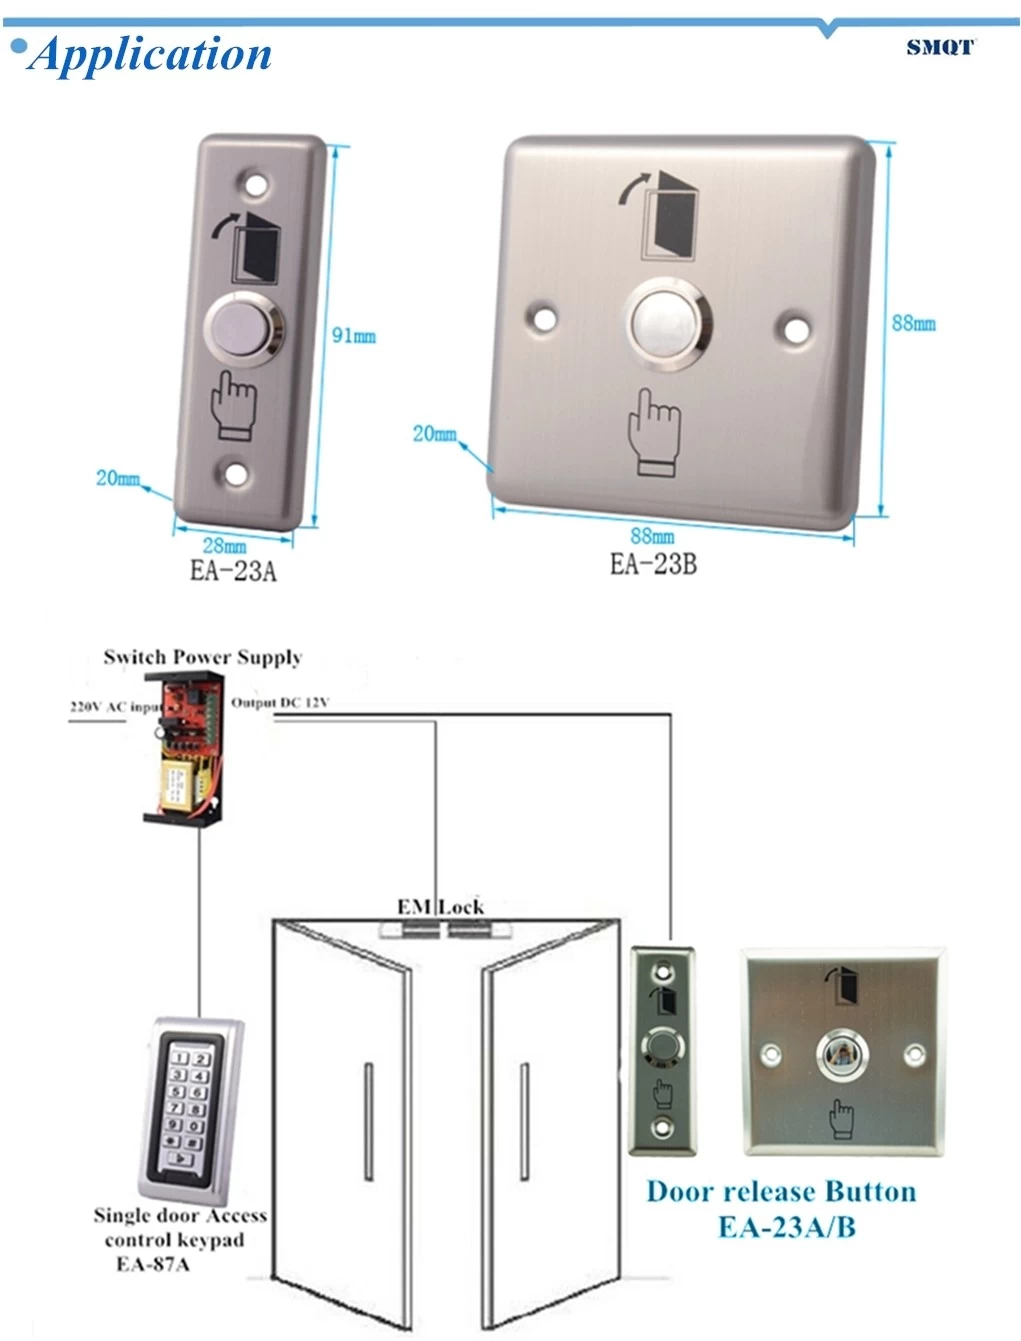 Stainless steel panel door release/push button